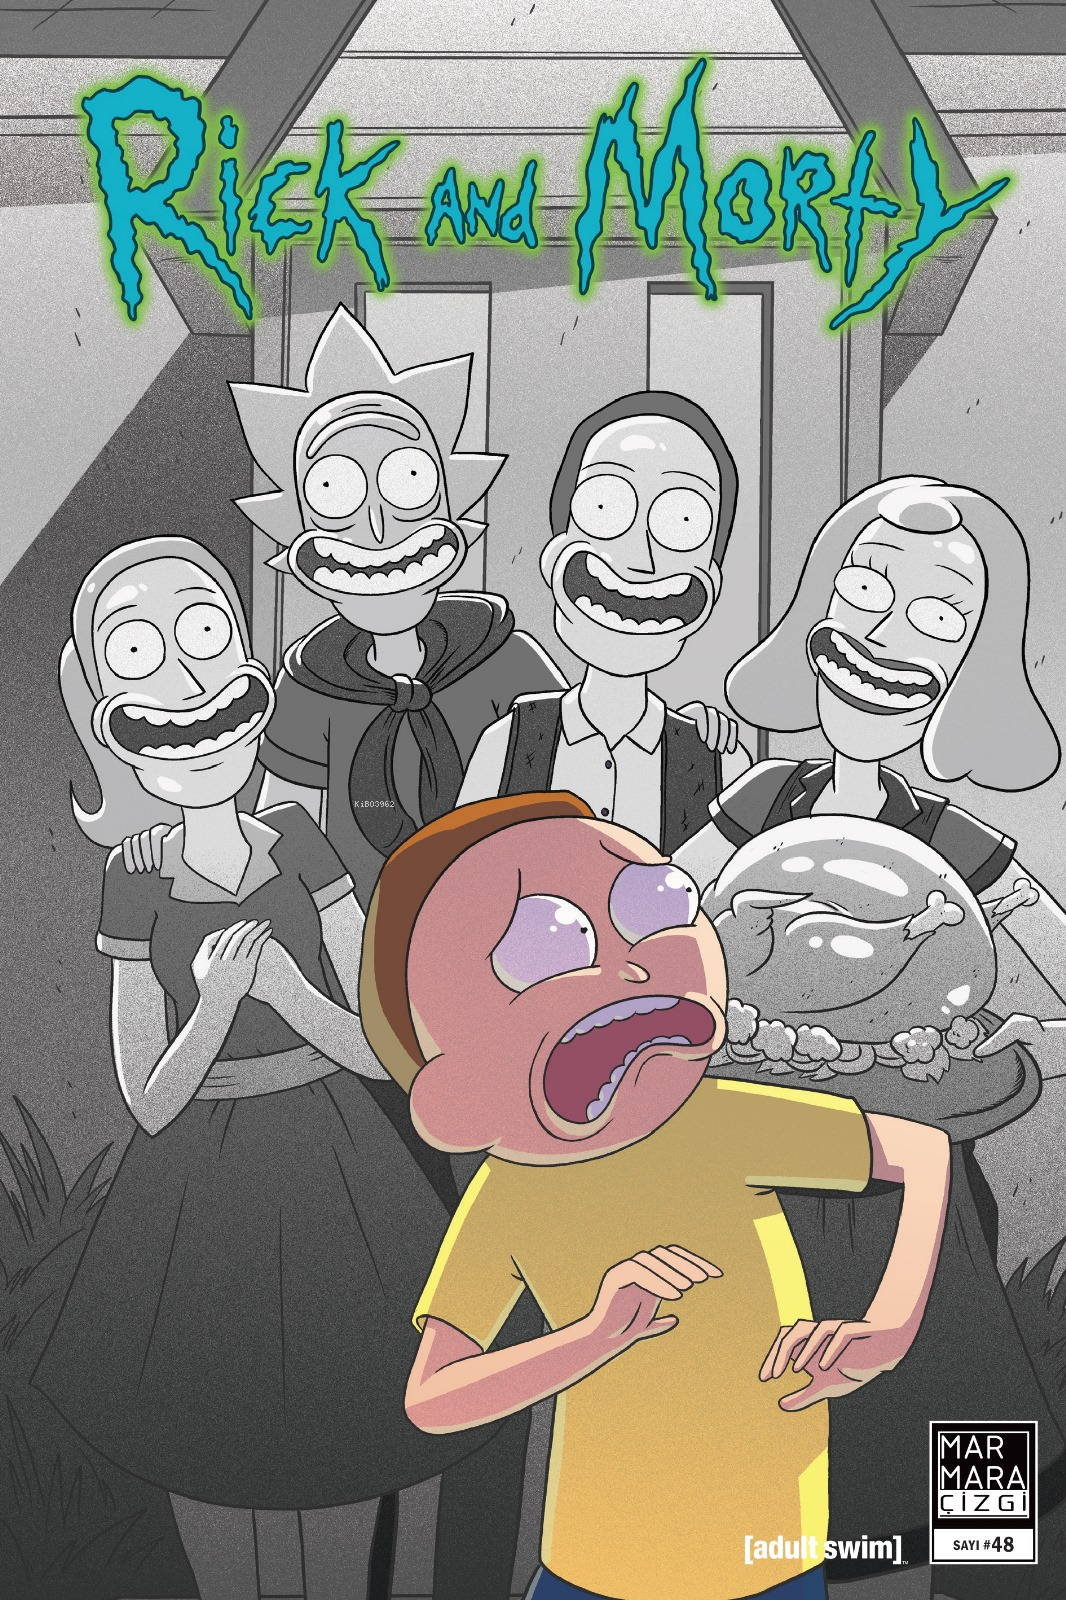 Rick and Morty #48